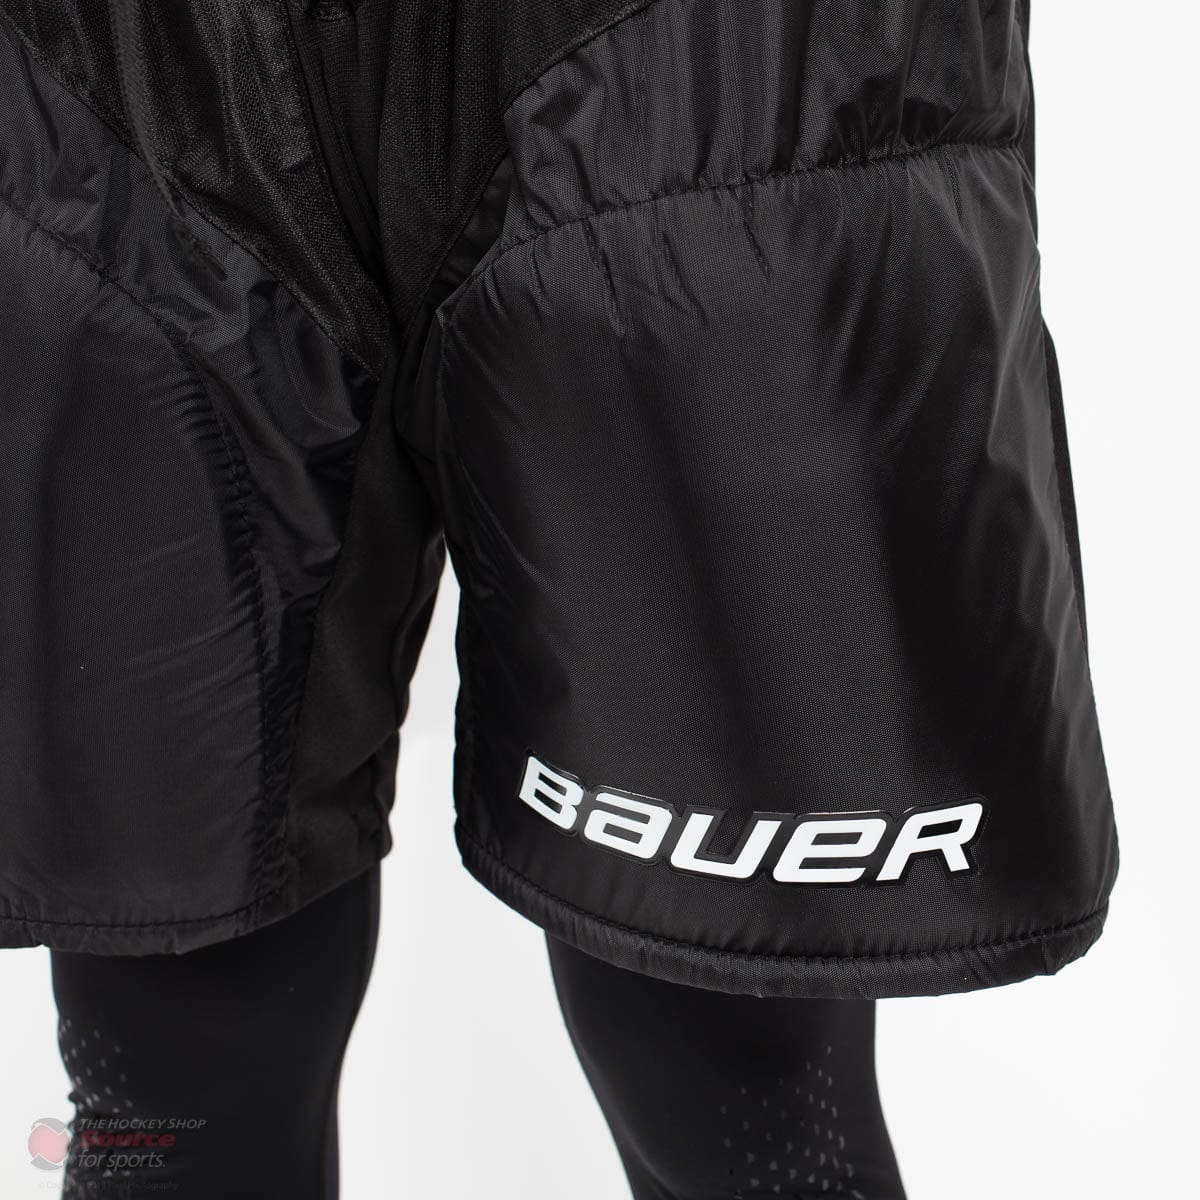 Bauer Supreme S27 Senior Hockey Pants